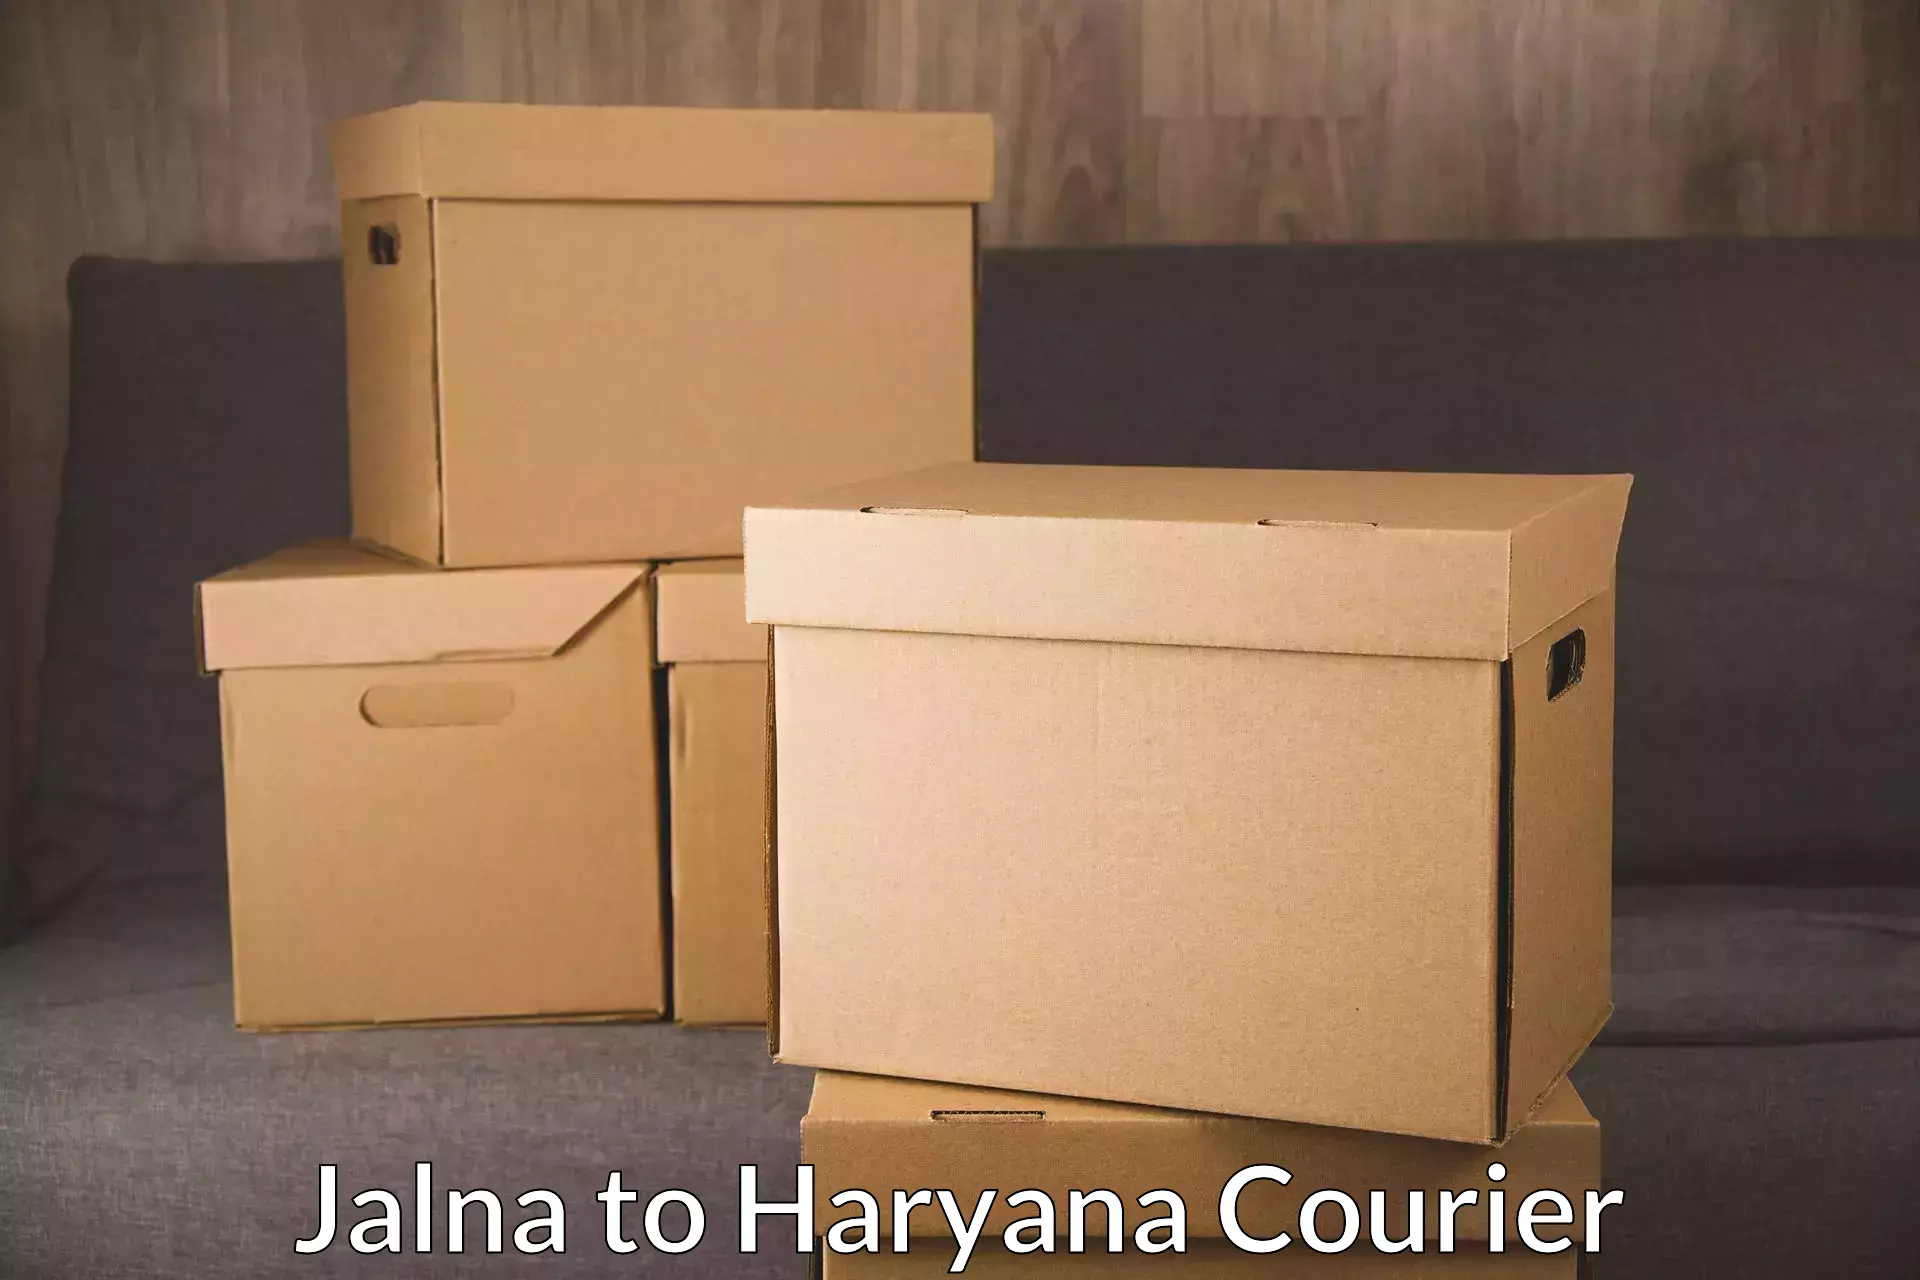 Courier service comparison in Jalna to Charkhi Dadri